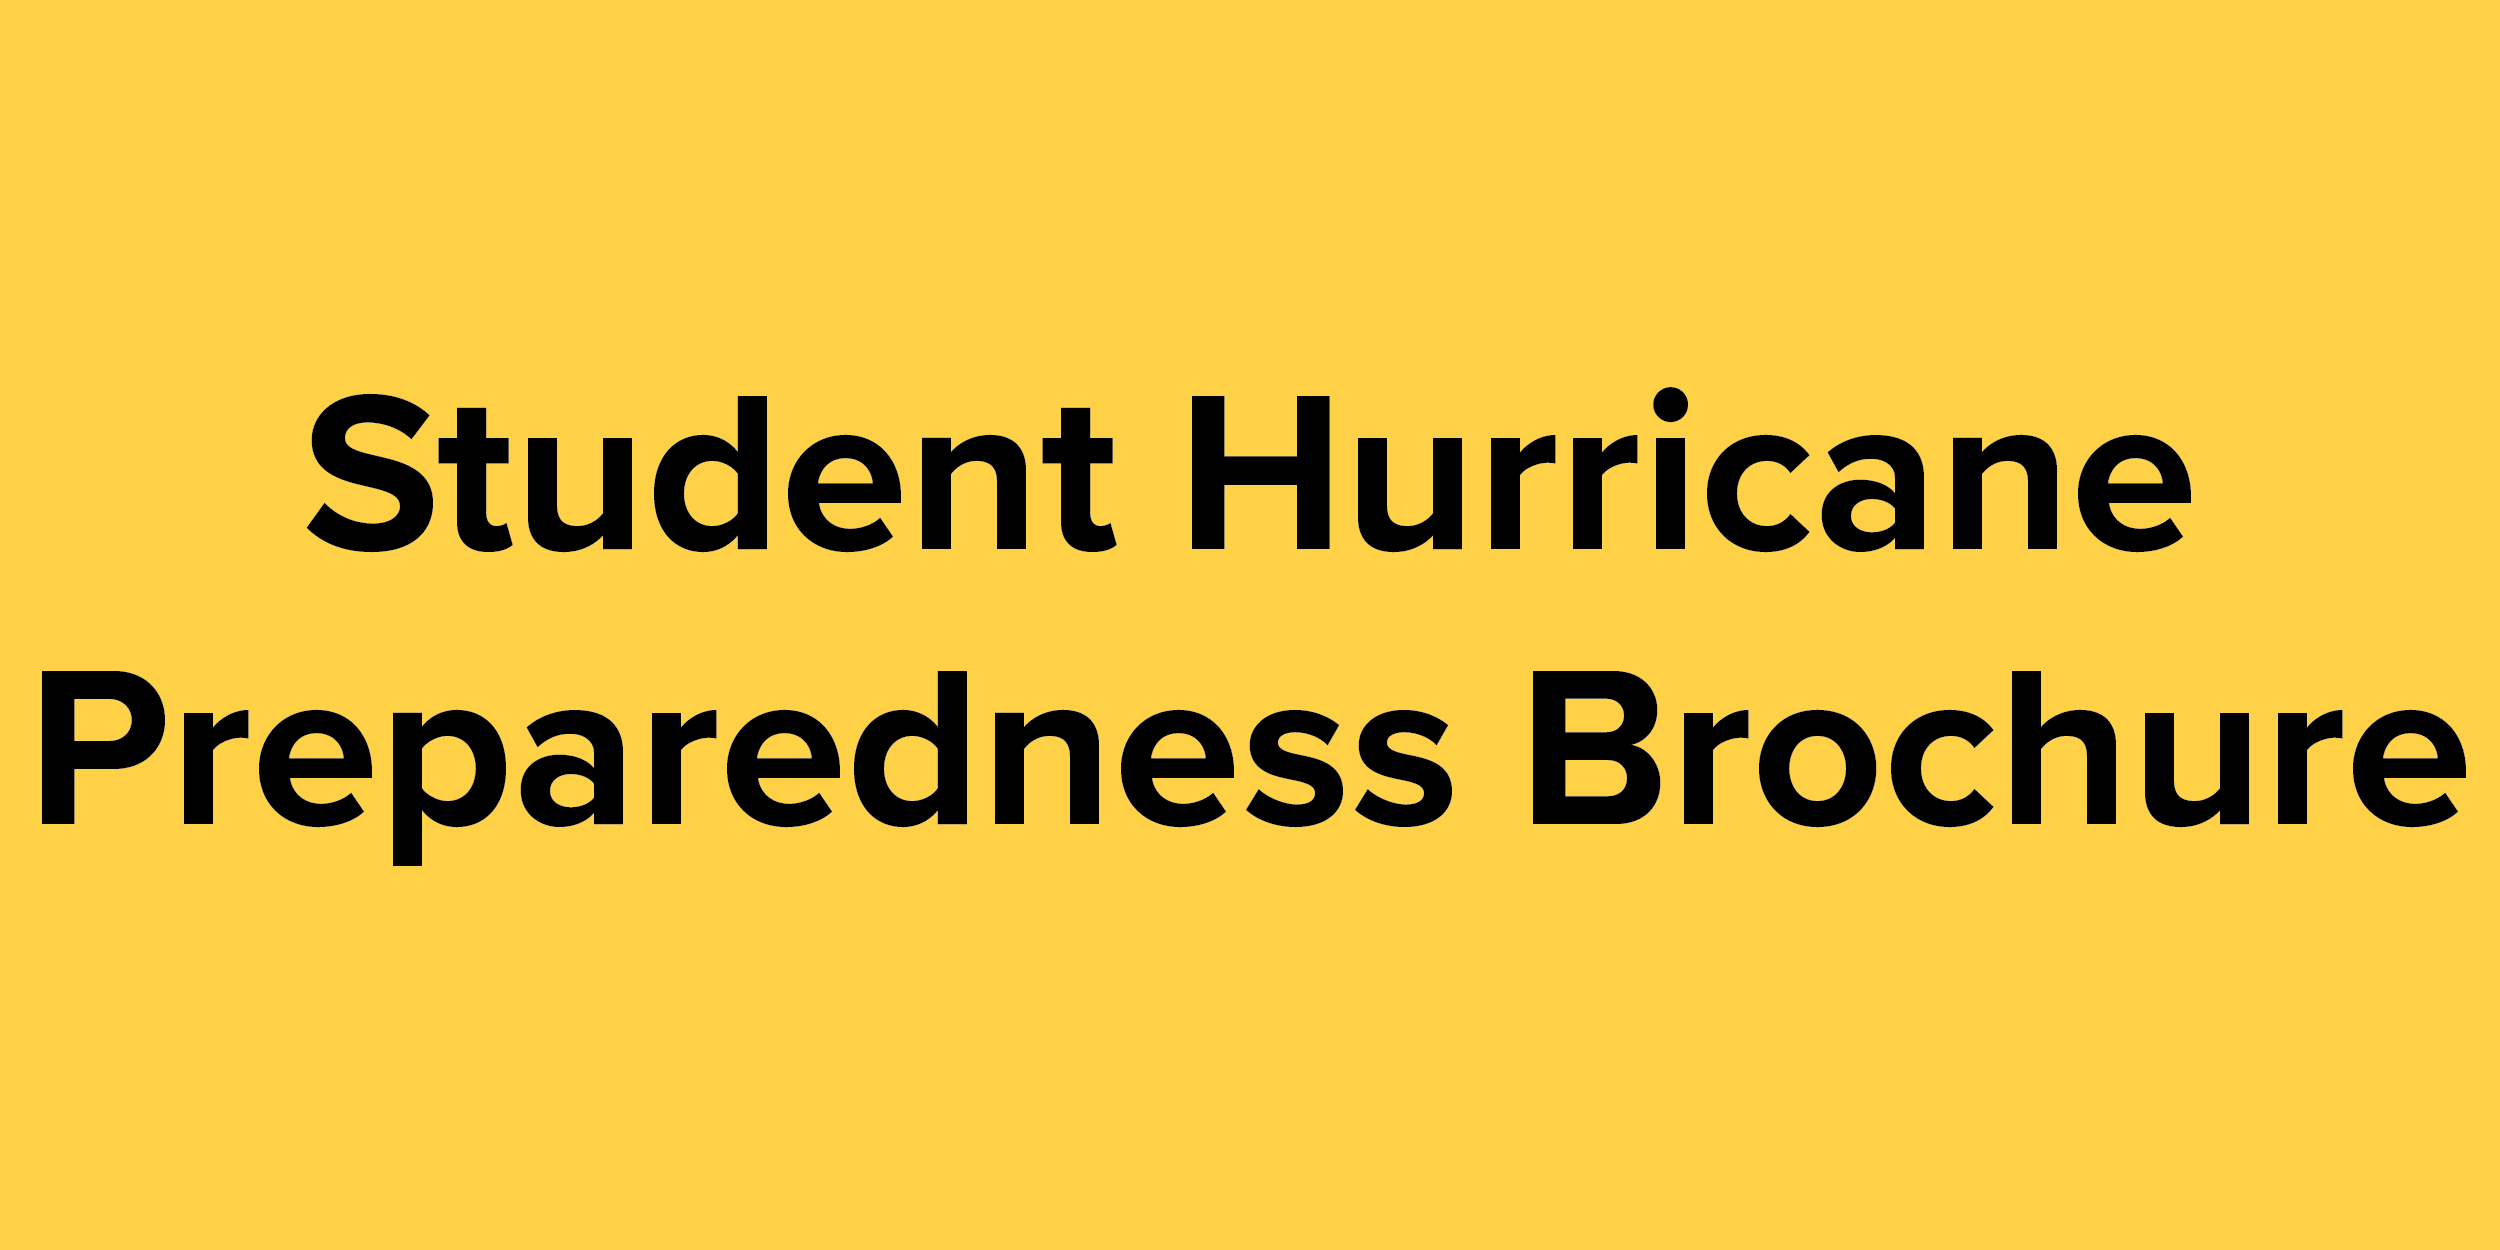 Student Hurricane Preparedness Brochure